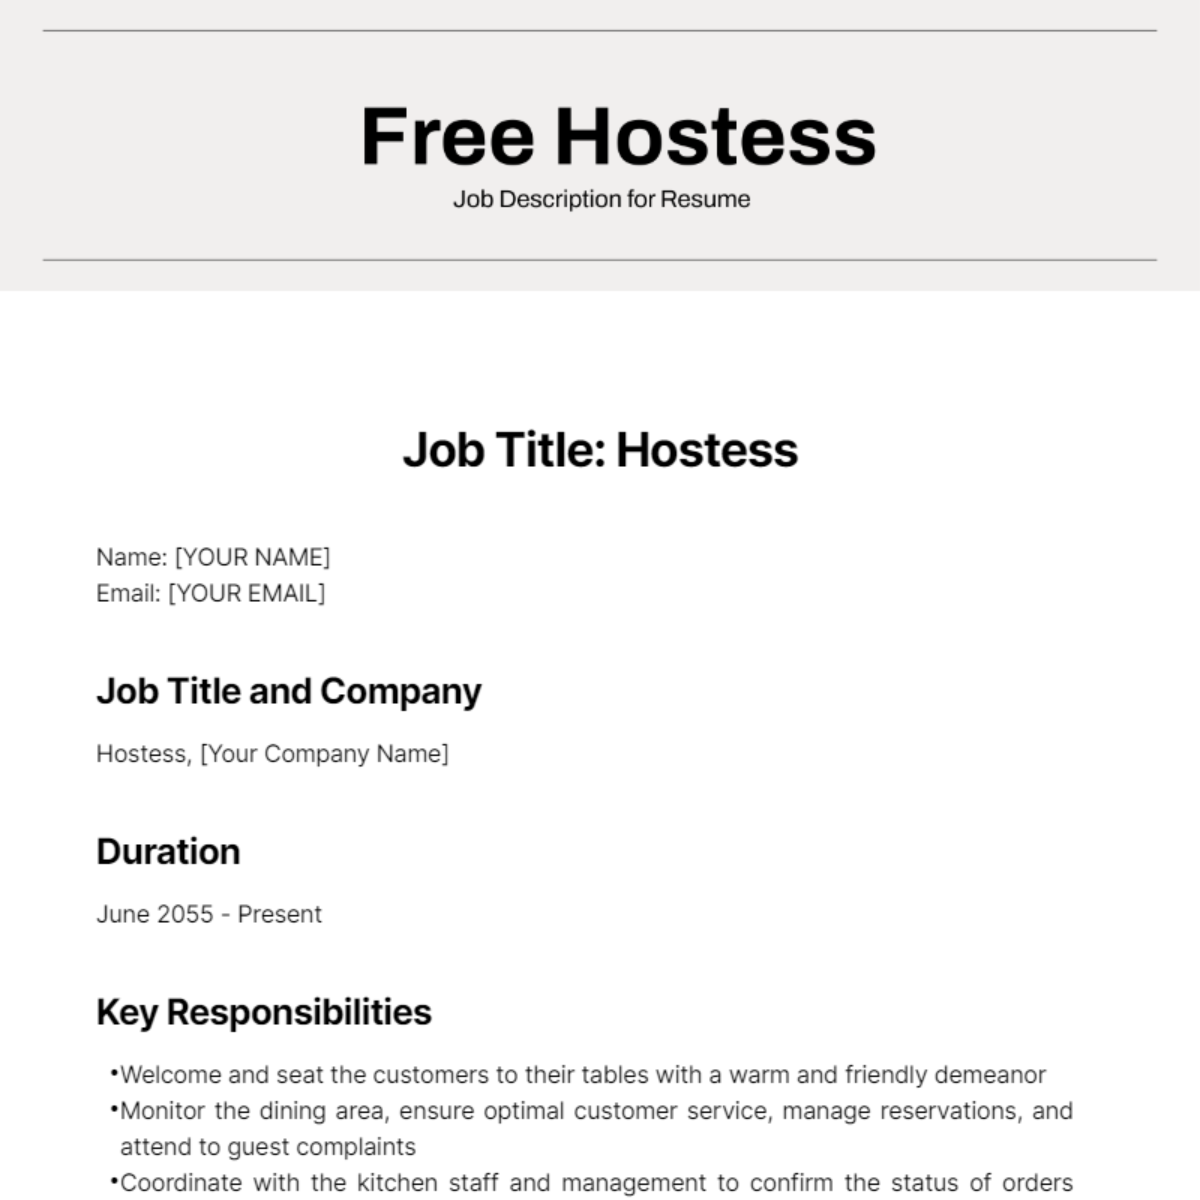 Hostess Job Description for Resume Template